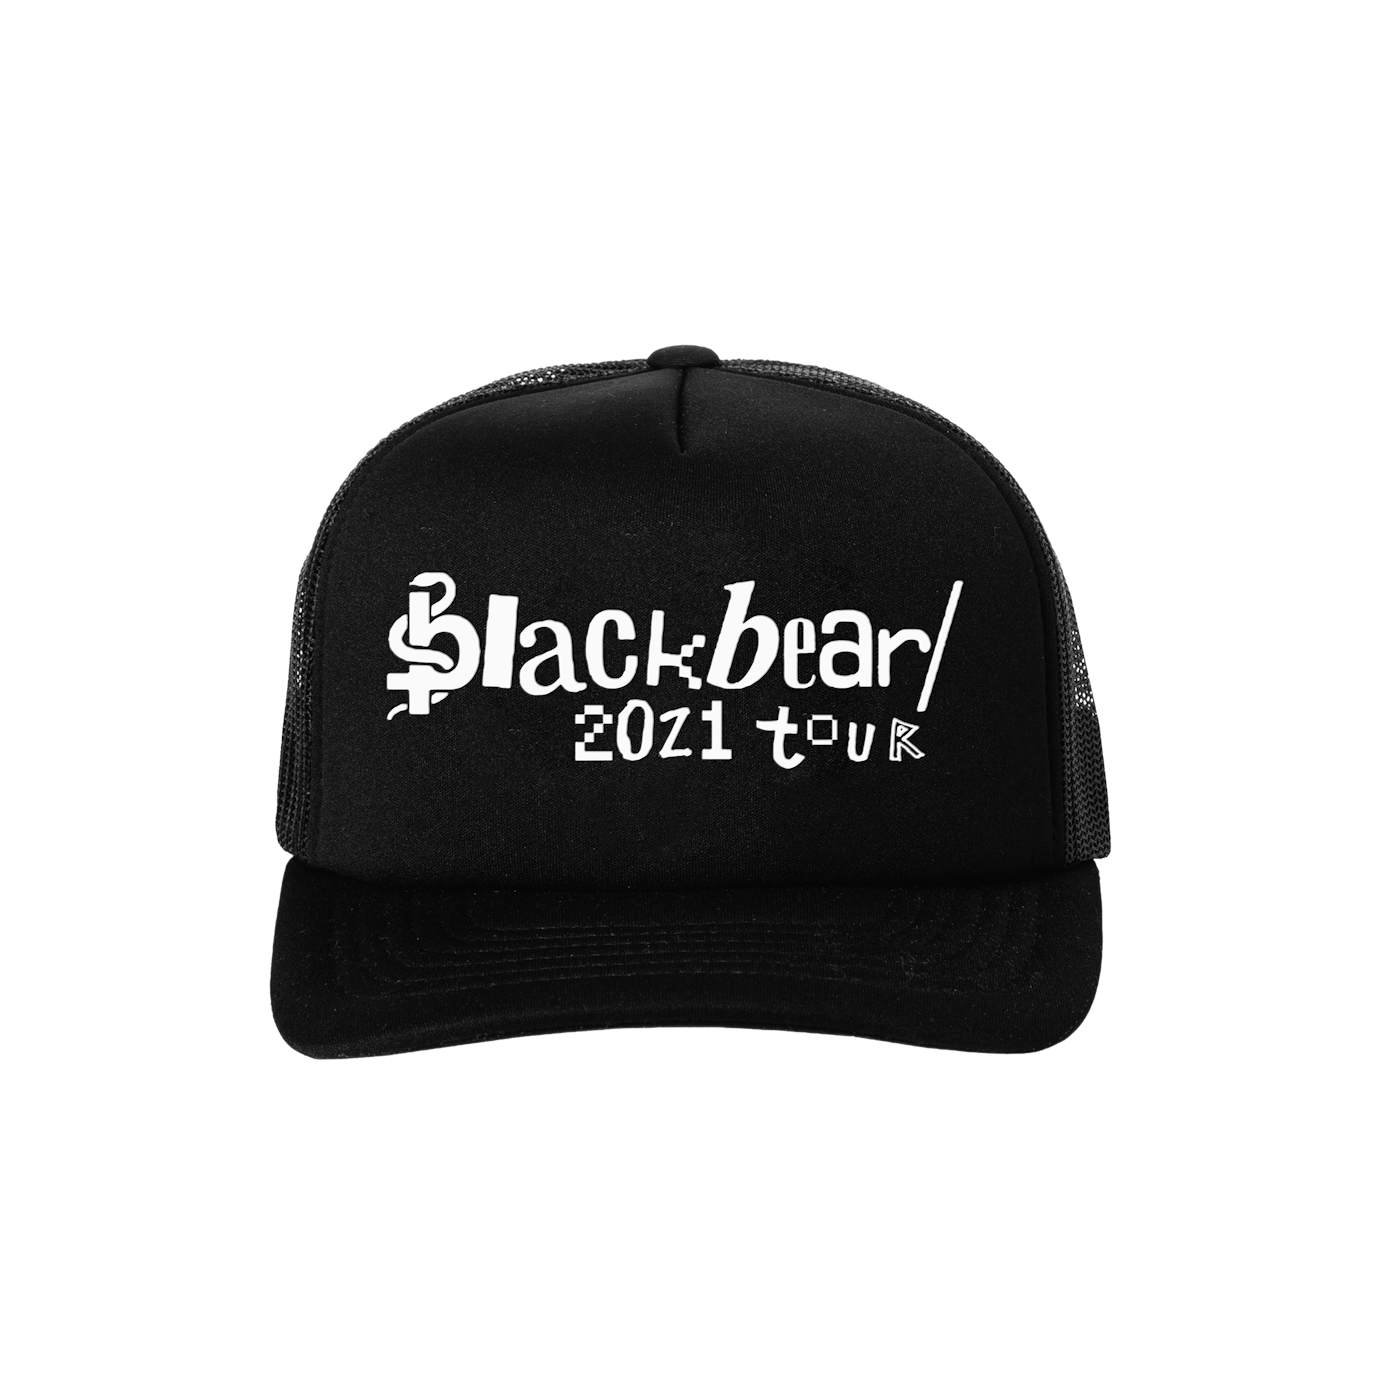 blackbear "2021" TOUR HAT